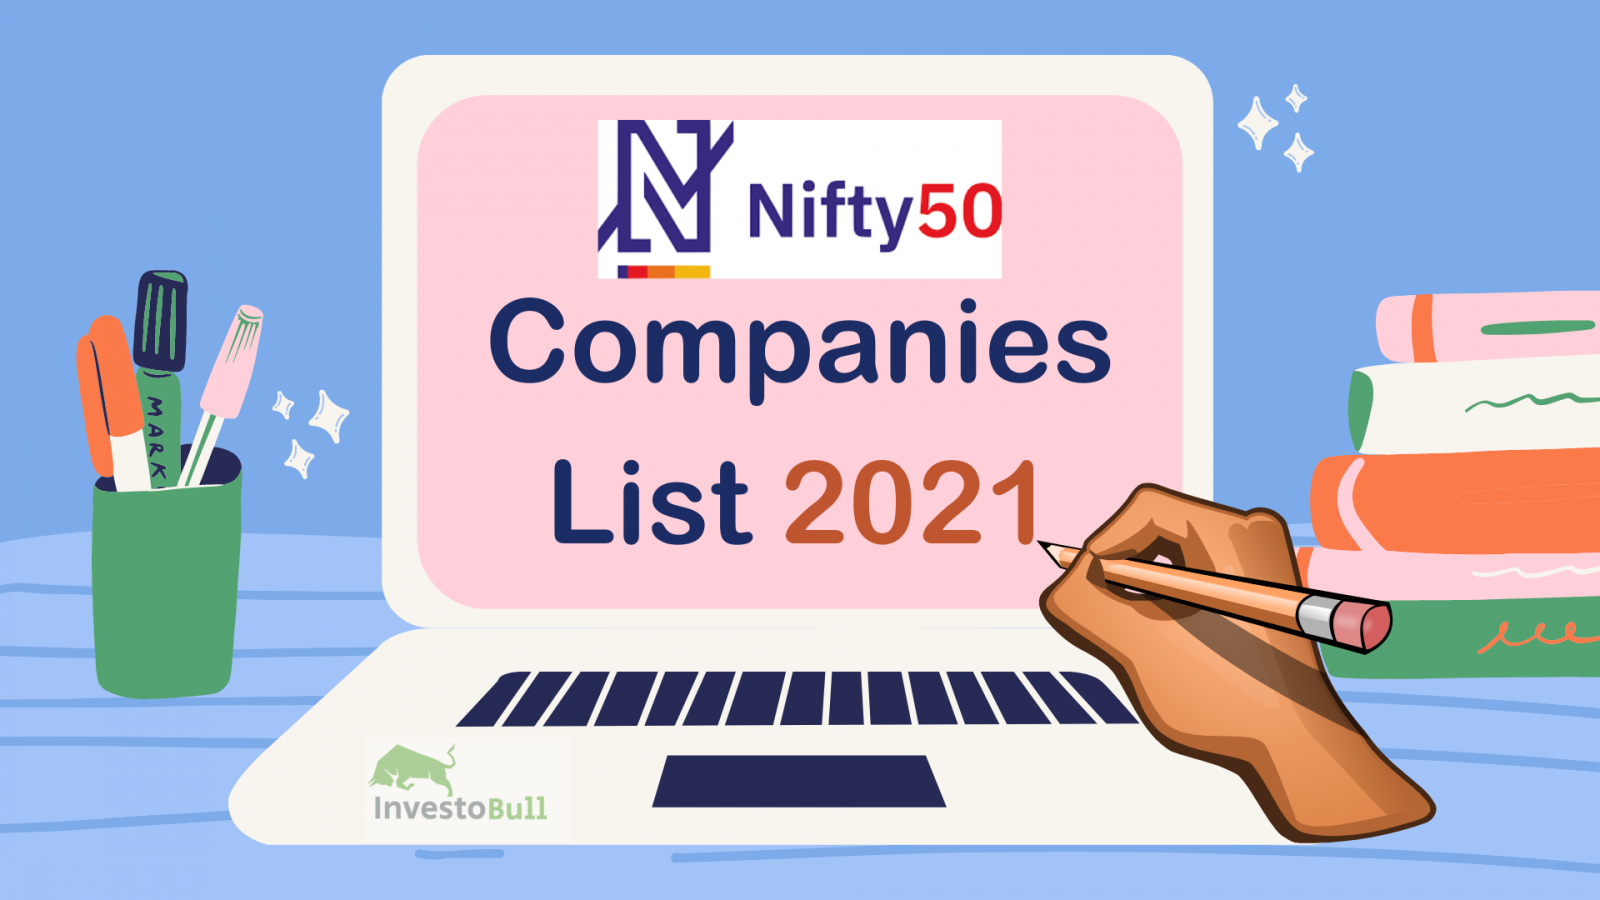 Nifty 50 Companies List 2021